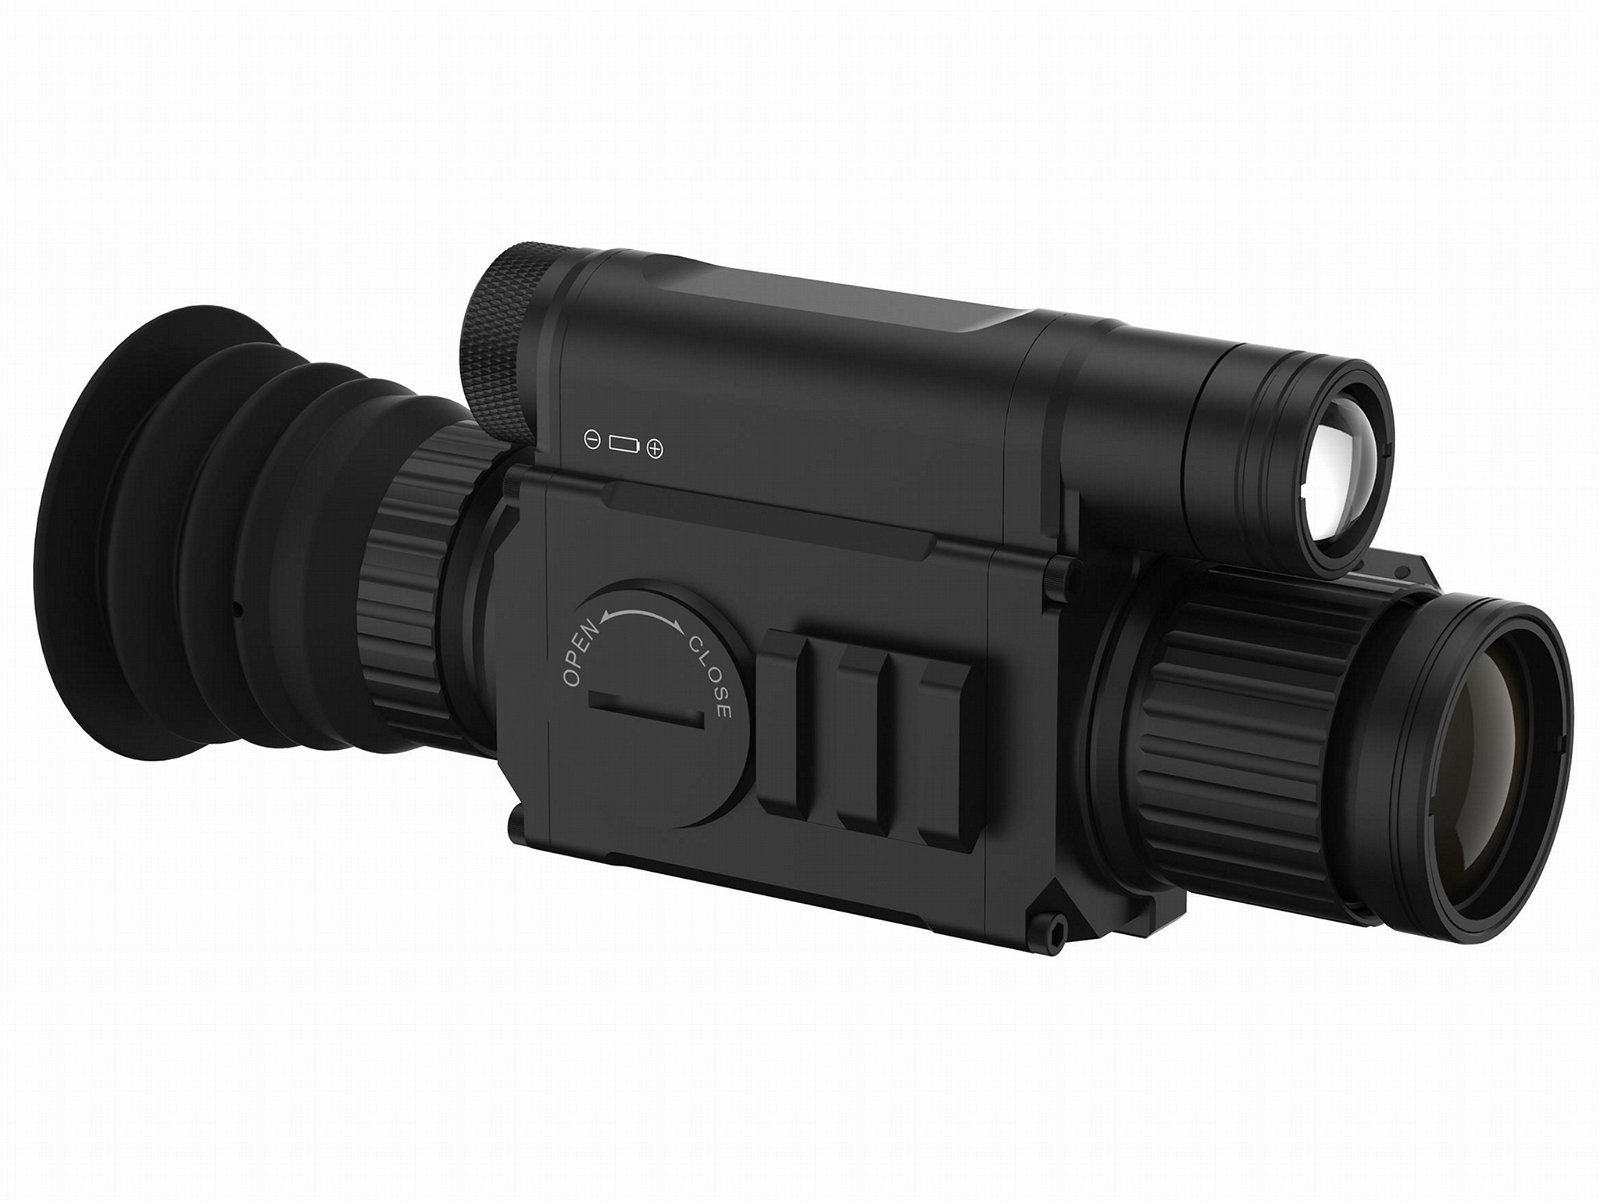 PARD NV0008 LRF night vision with rangefinder 4